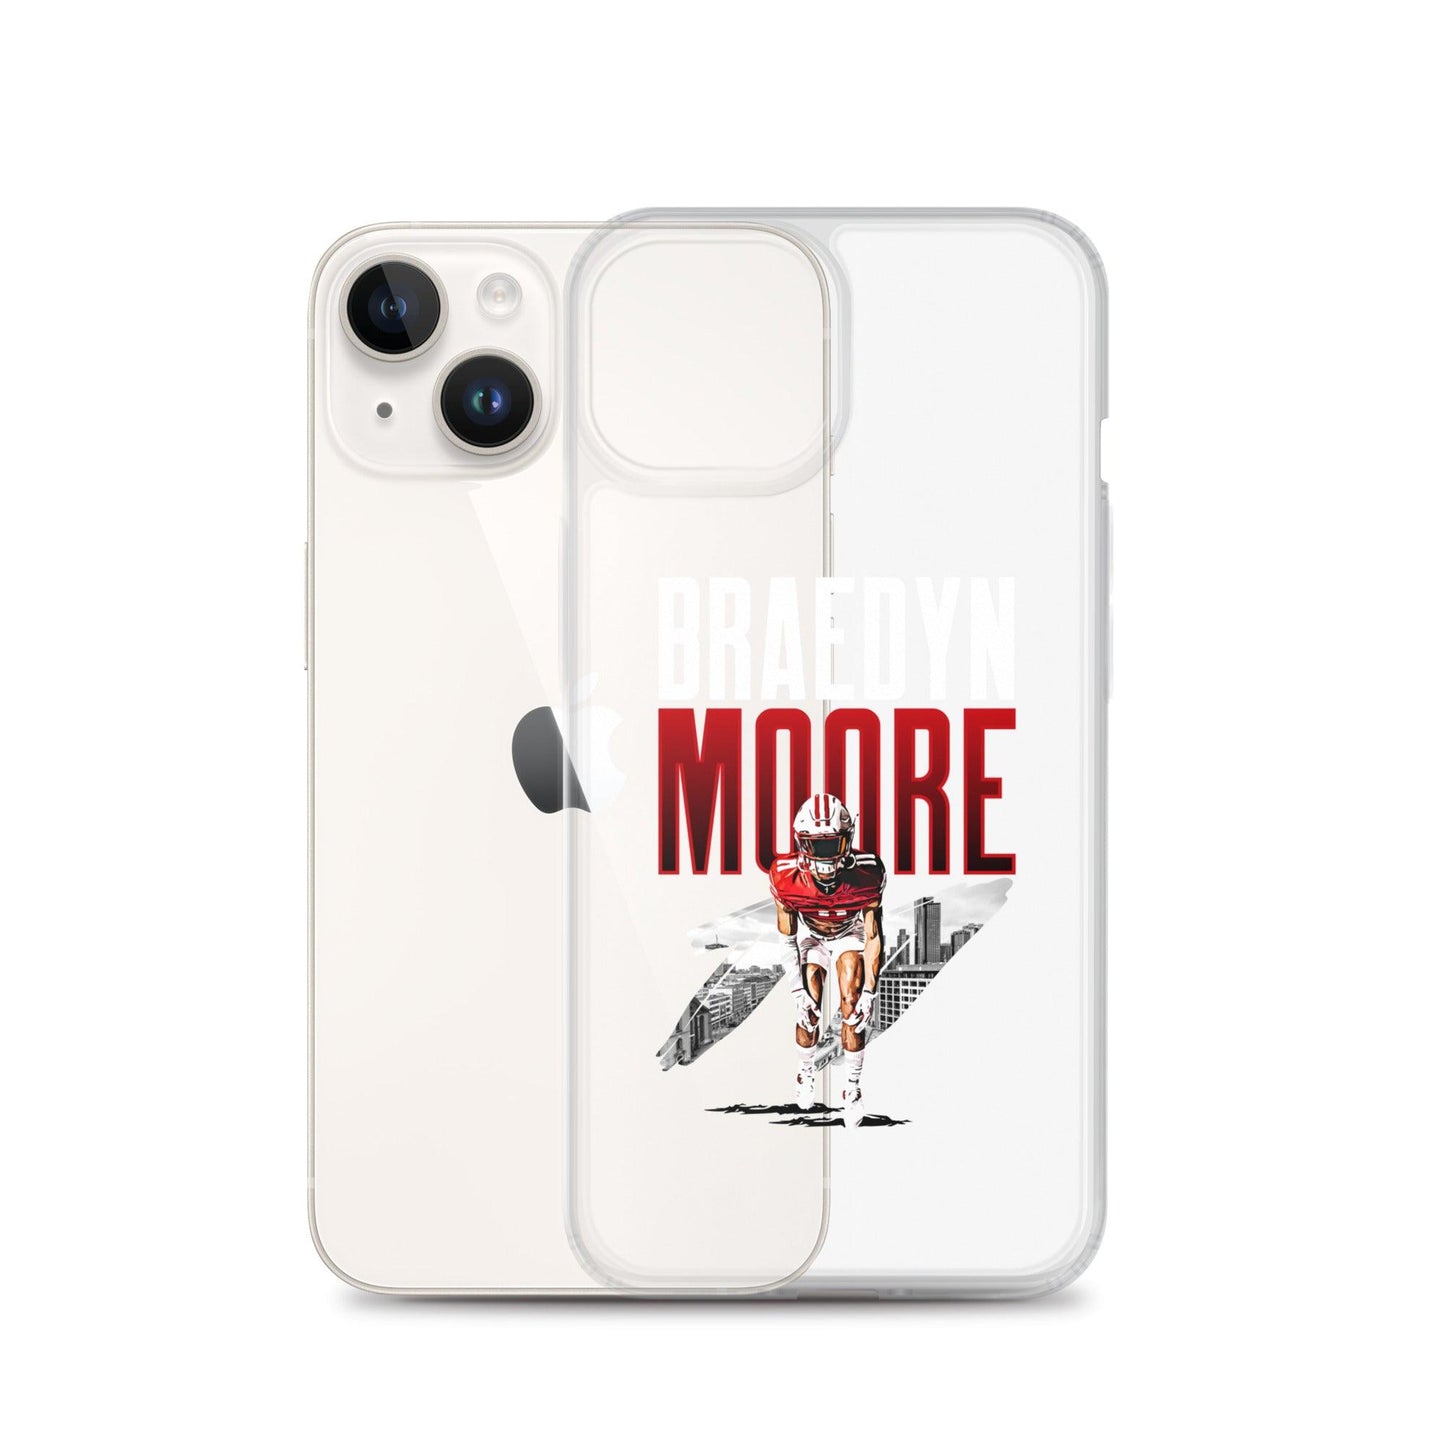 Braedyn Moore "Gameday" iPhone Case - Fan Arch